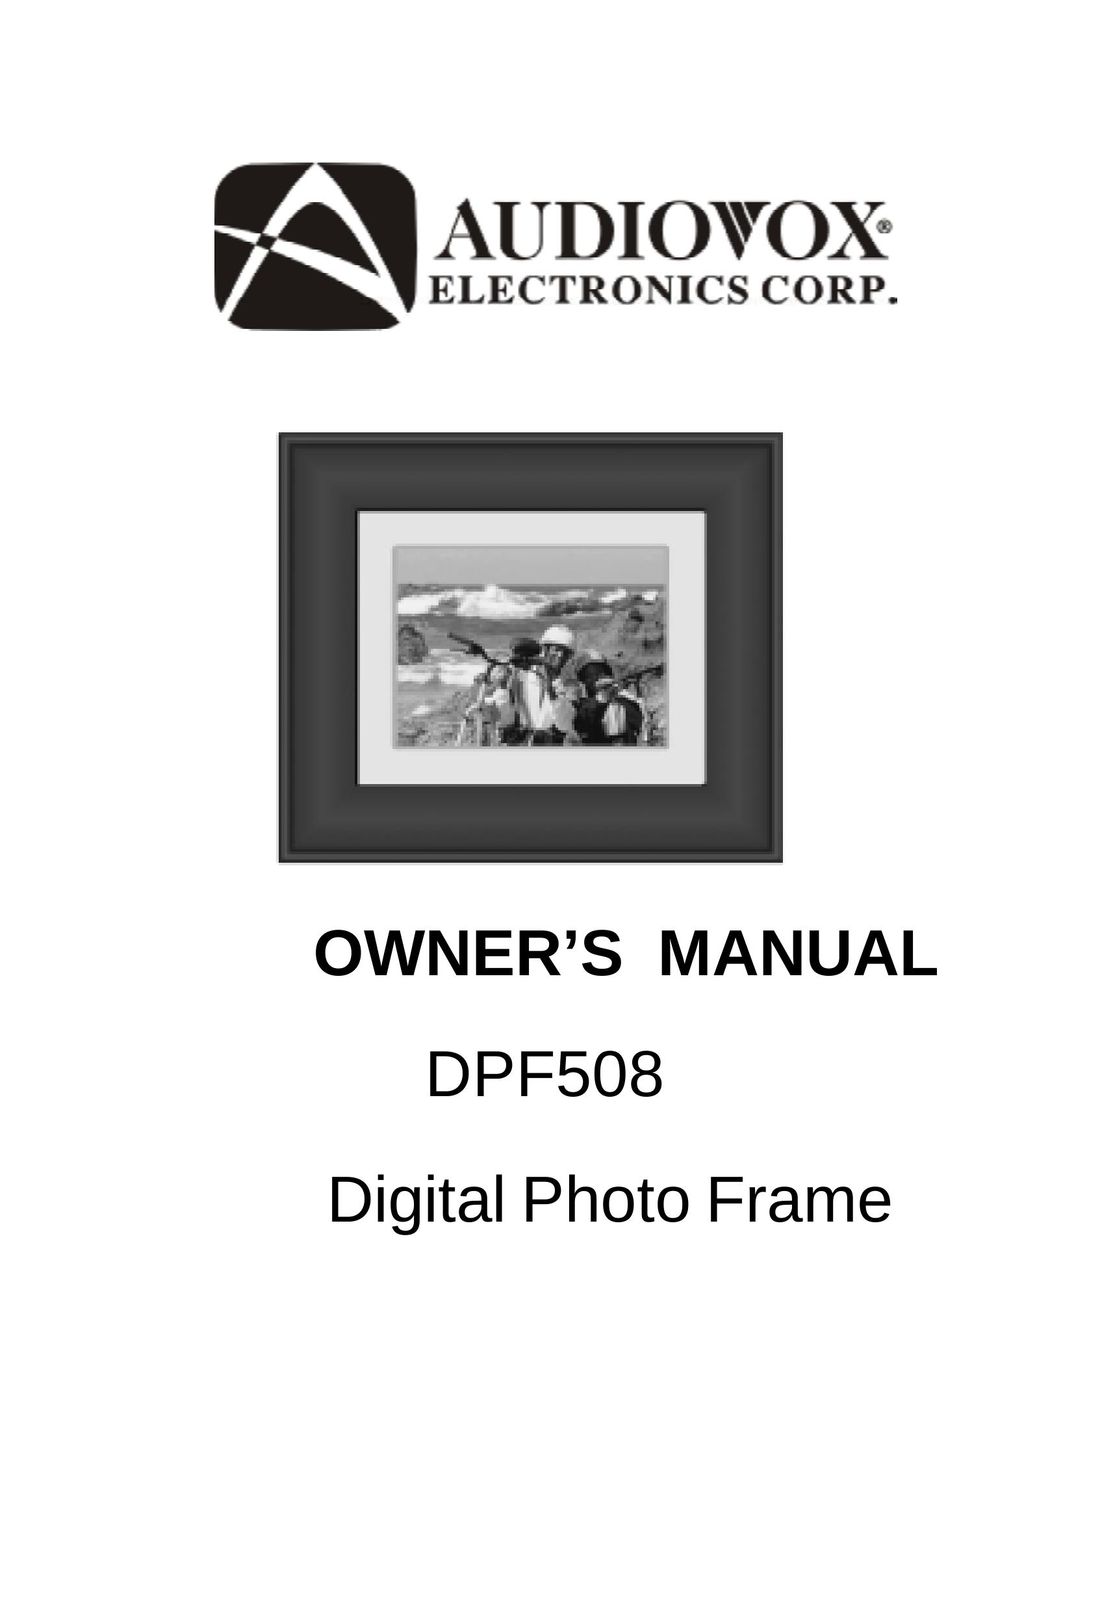 Audiovox DPF508 MP3 Player User Manual